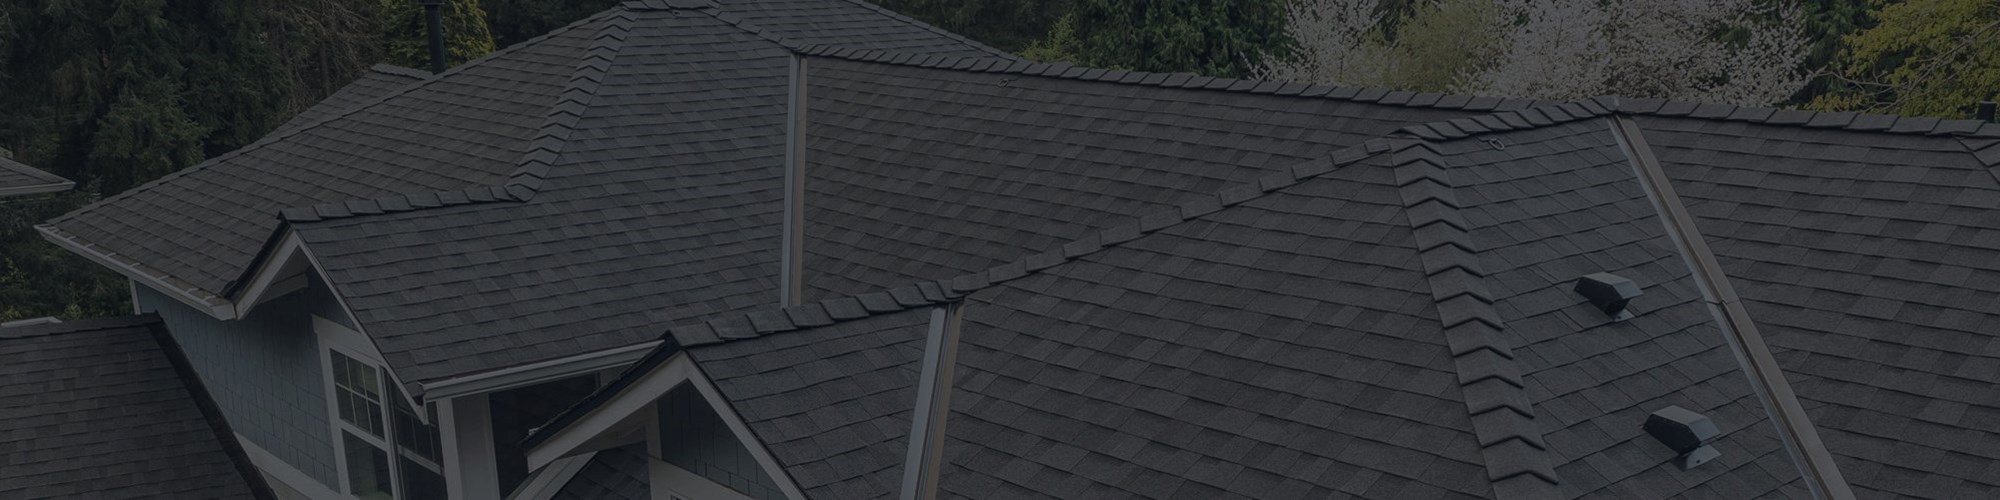 Asphalt roof repair project in Seattle, Washington